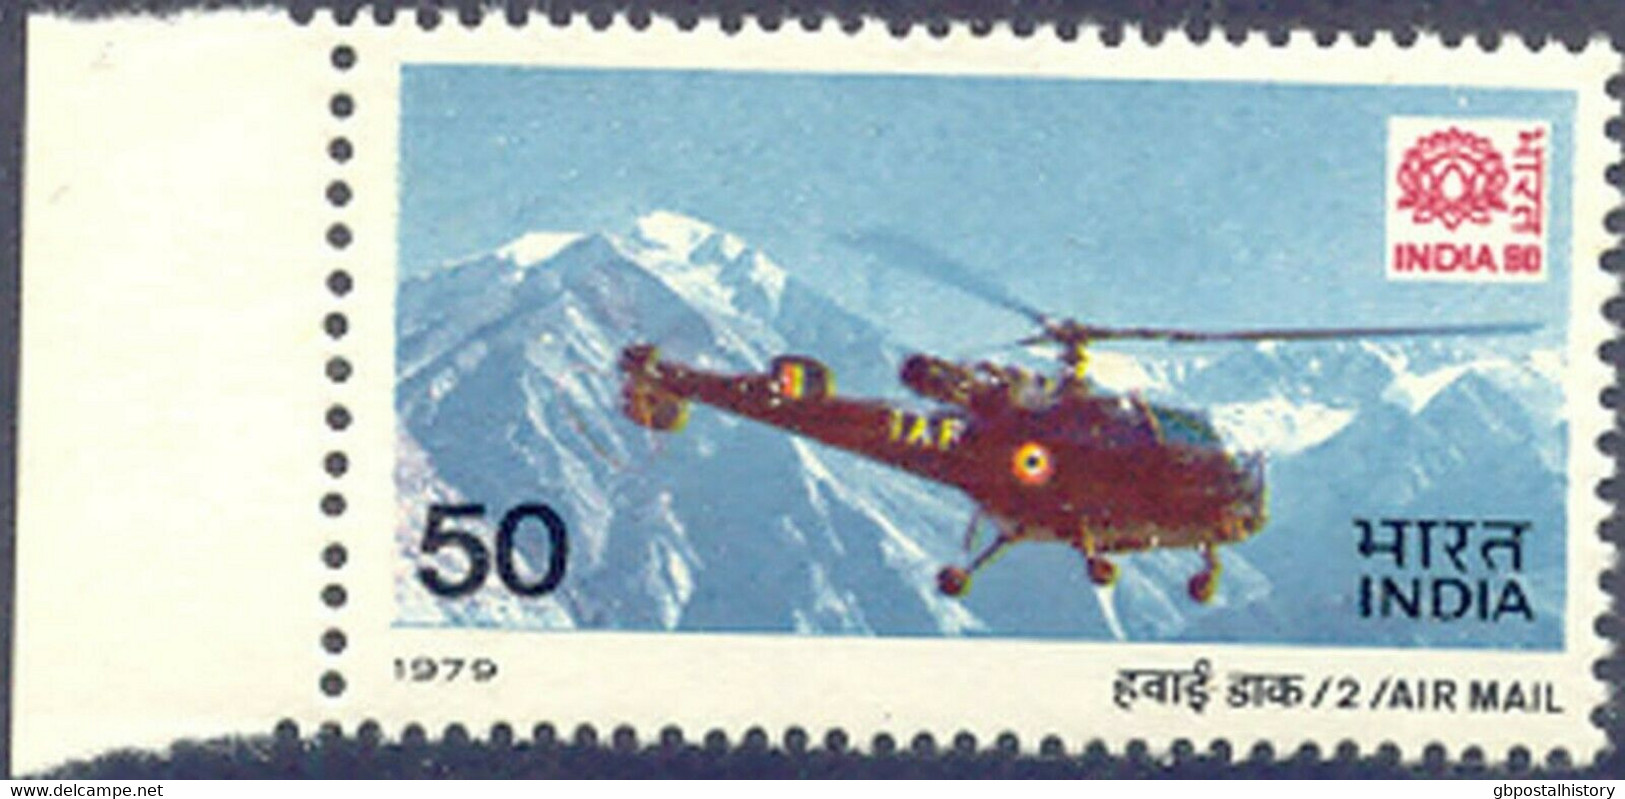 INDIA 1979 Int. Stamp Exhibition India '80 Chetak-Helicopter 50 P U/M VARIETY - Variedades Y Curiosidades